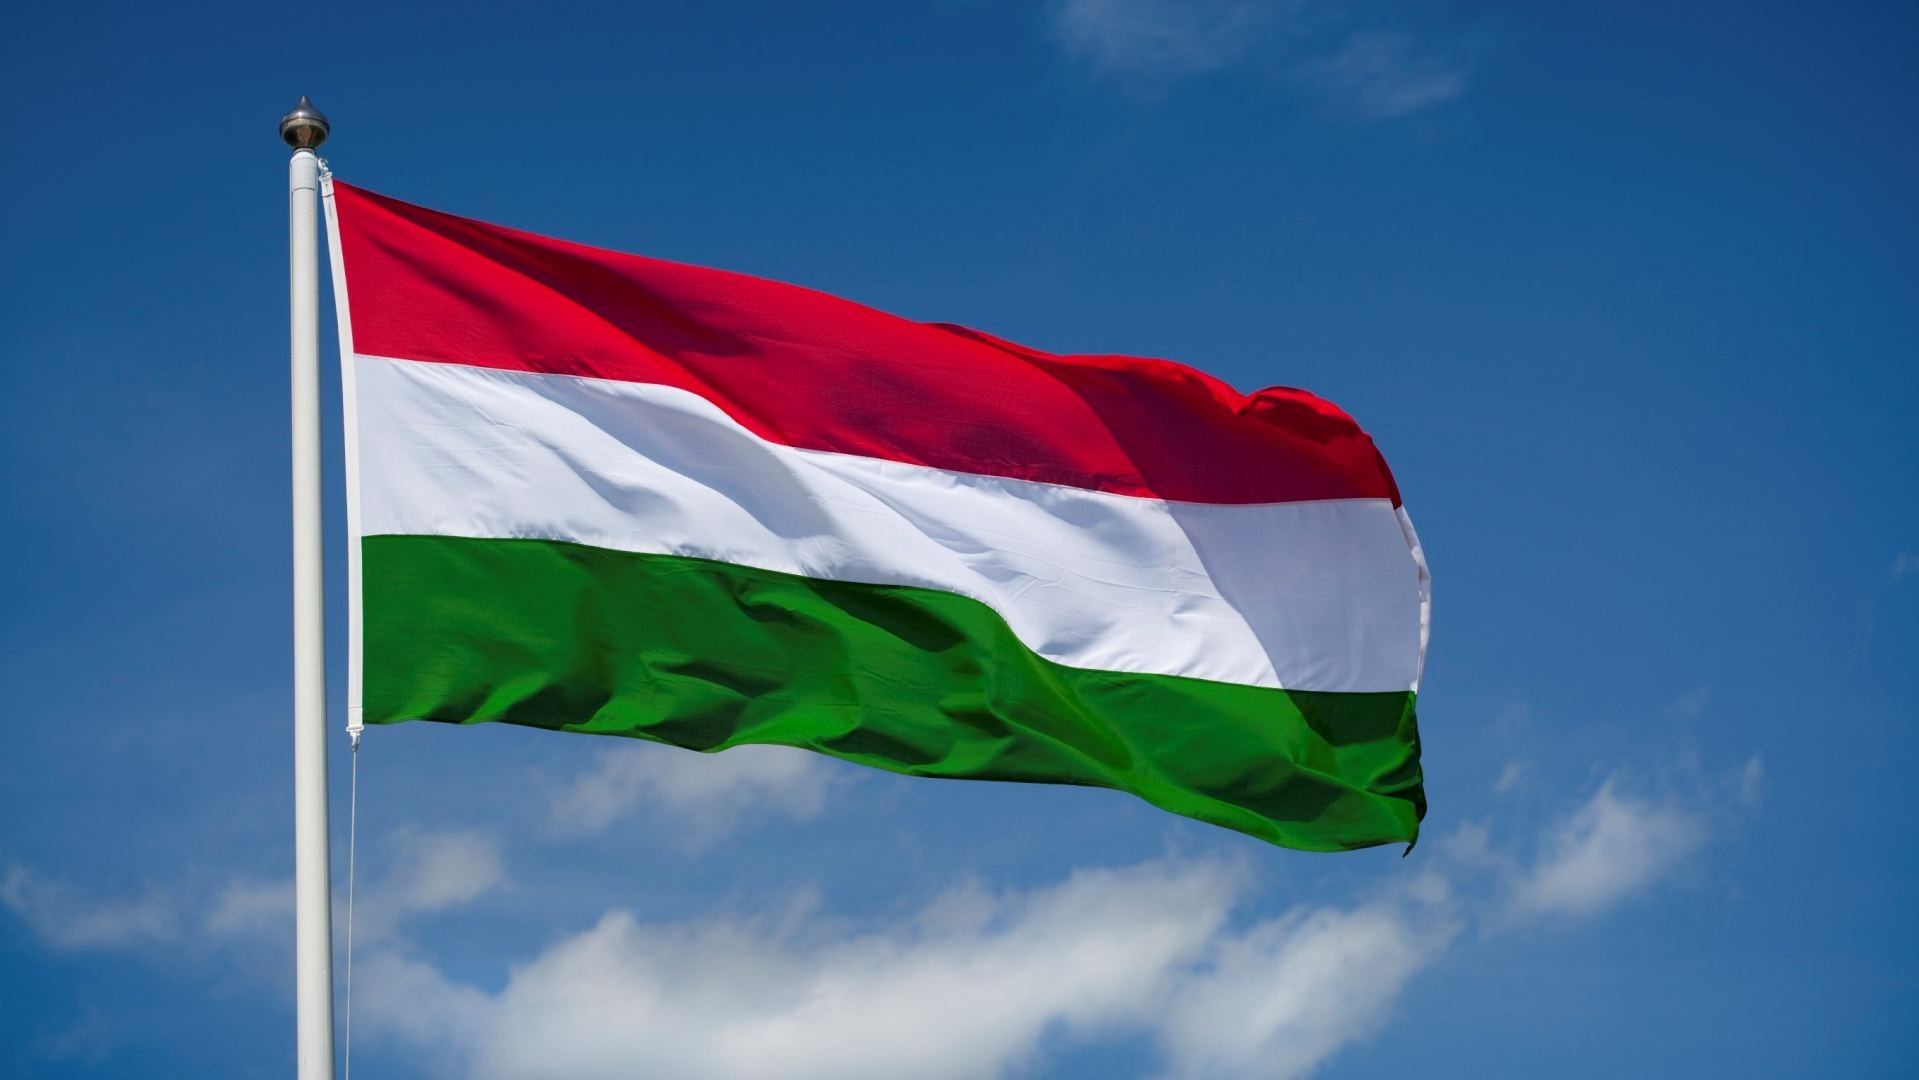 Hungary considers so-called “presidential elections” in Azerbaijan’s Karabakh illegitimate - MFA